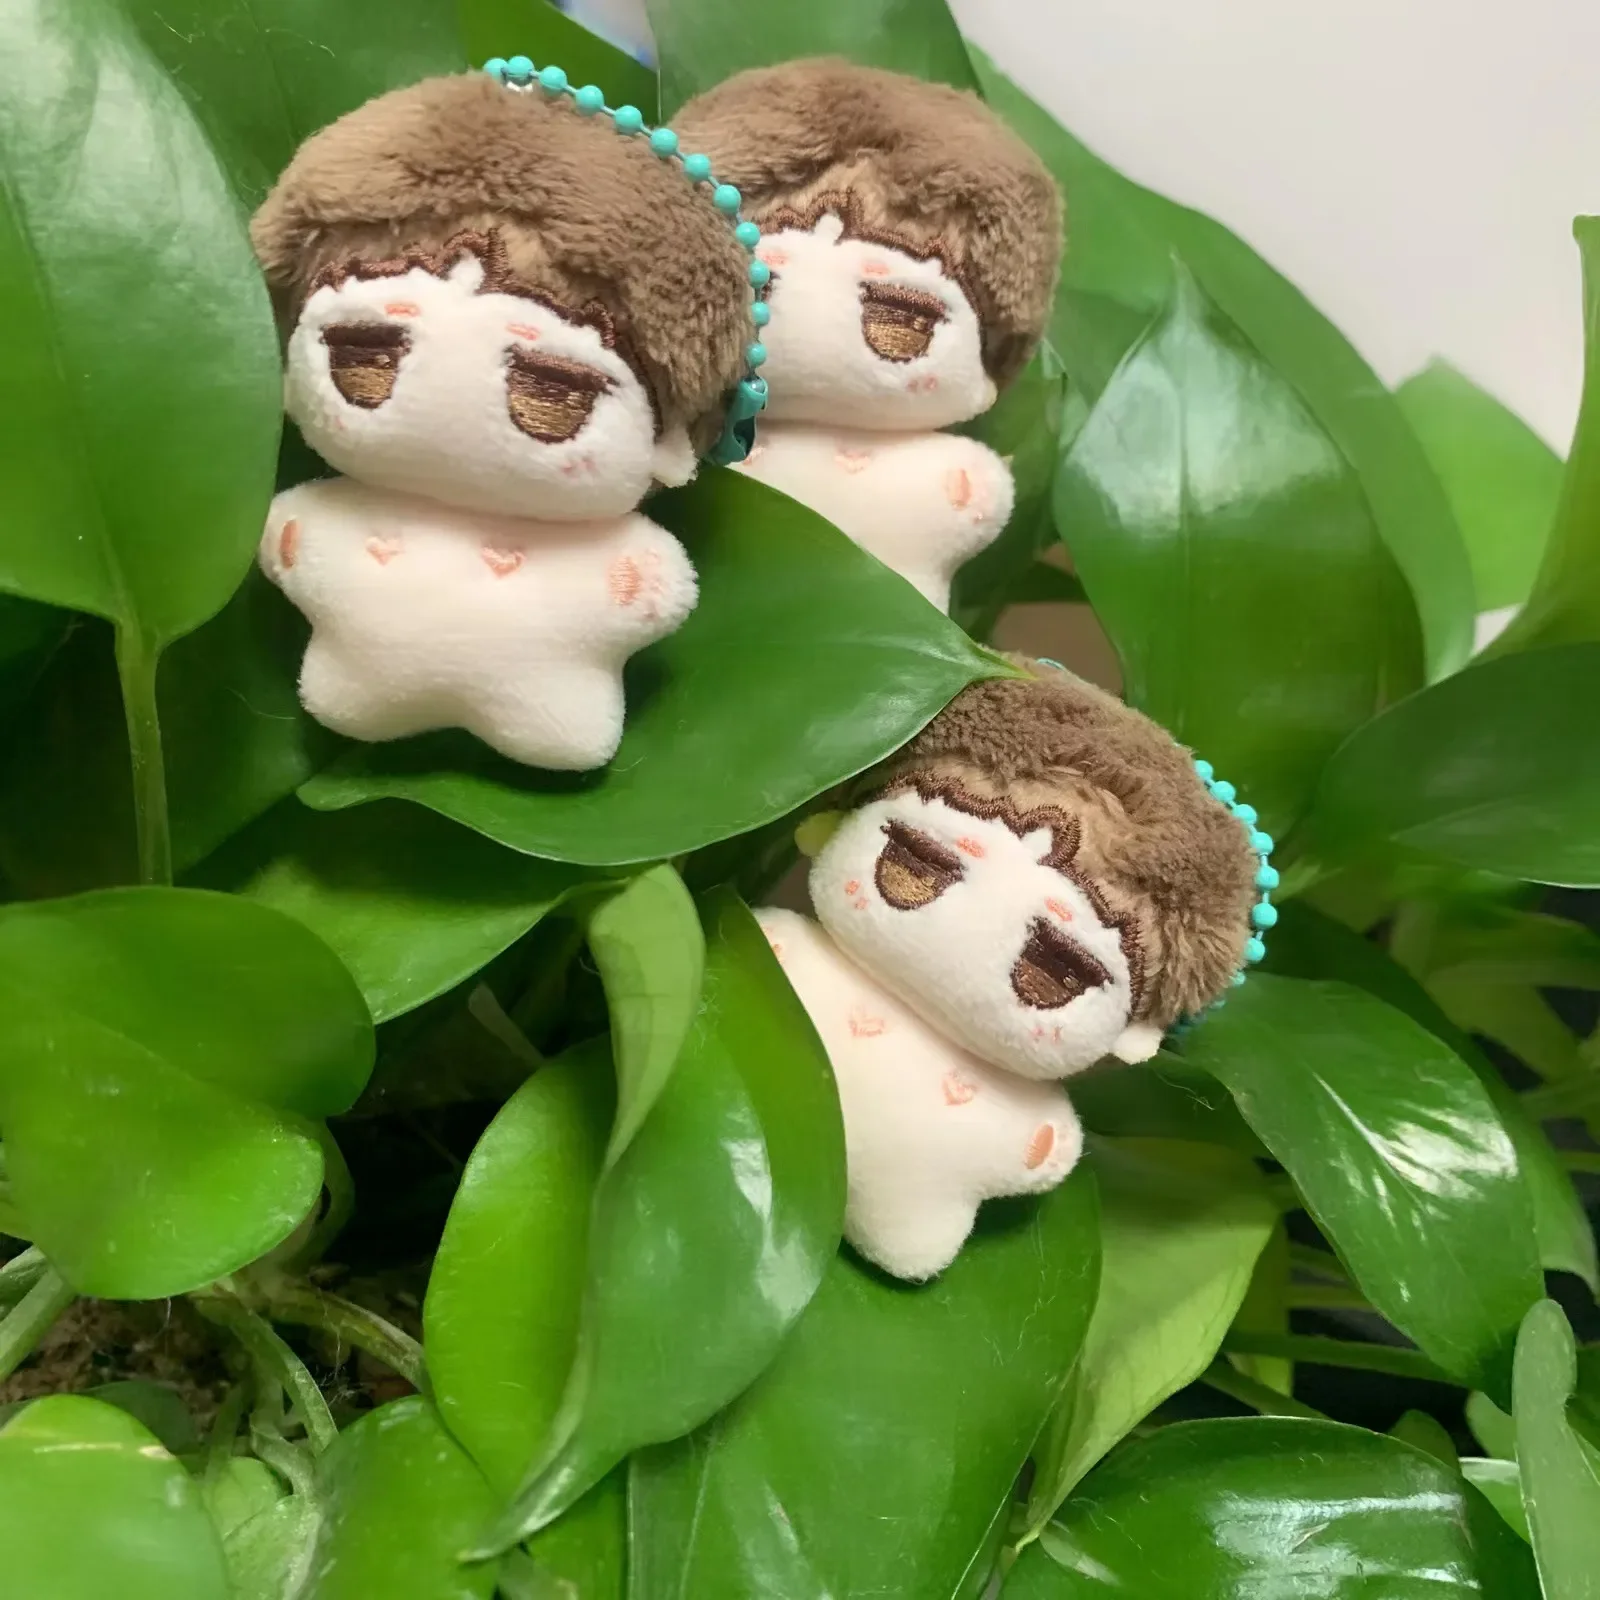 5cm Kawaii Idol Plush Cotton Dolls BJYX Naked Stuffed Mini Doll Soft Toys Schoolbag Decoration Key Chain Gifts for Fans Friends кукла line friends bt21 cooky mini mini 7 вариантов